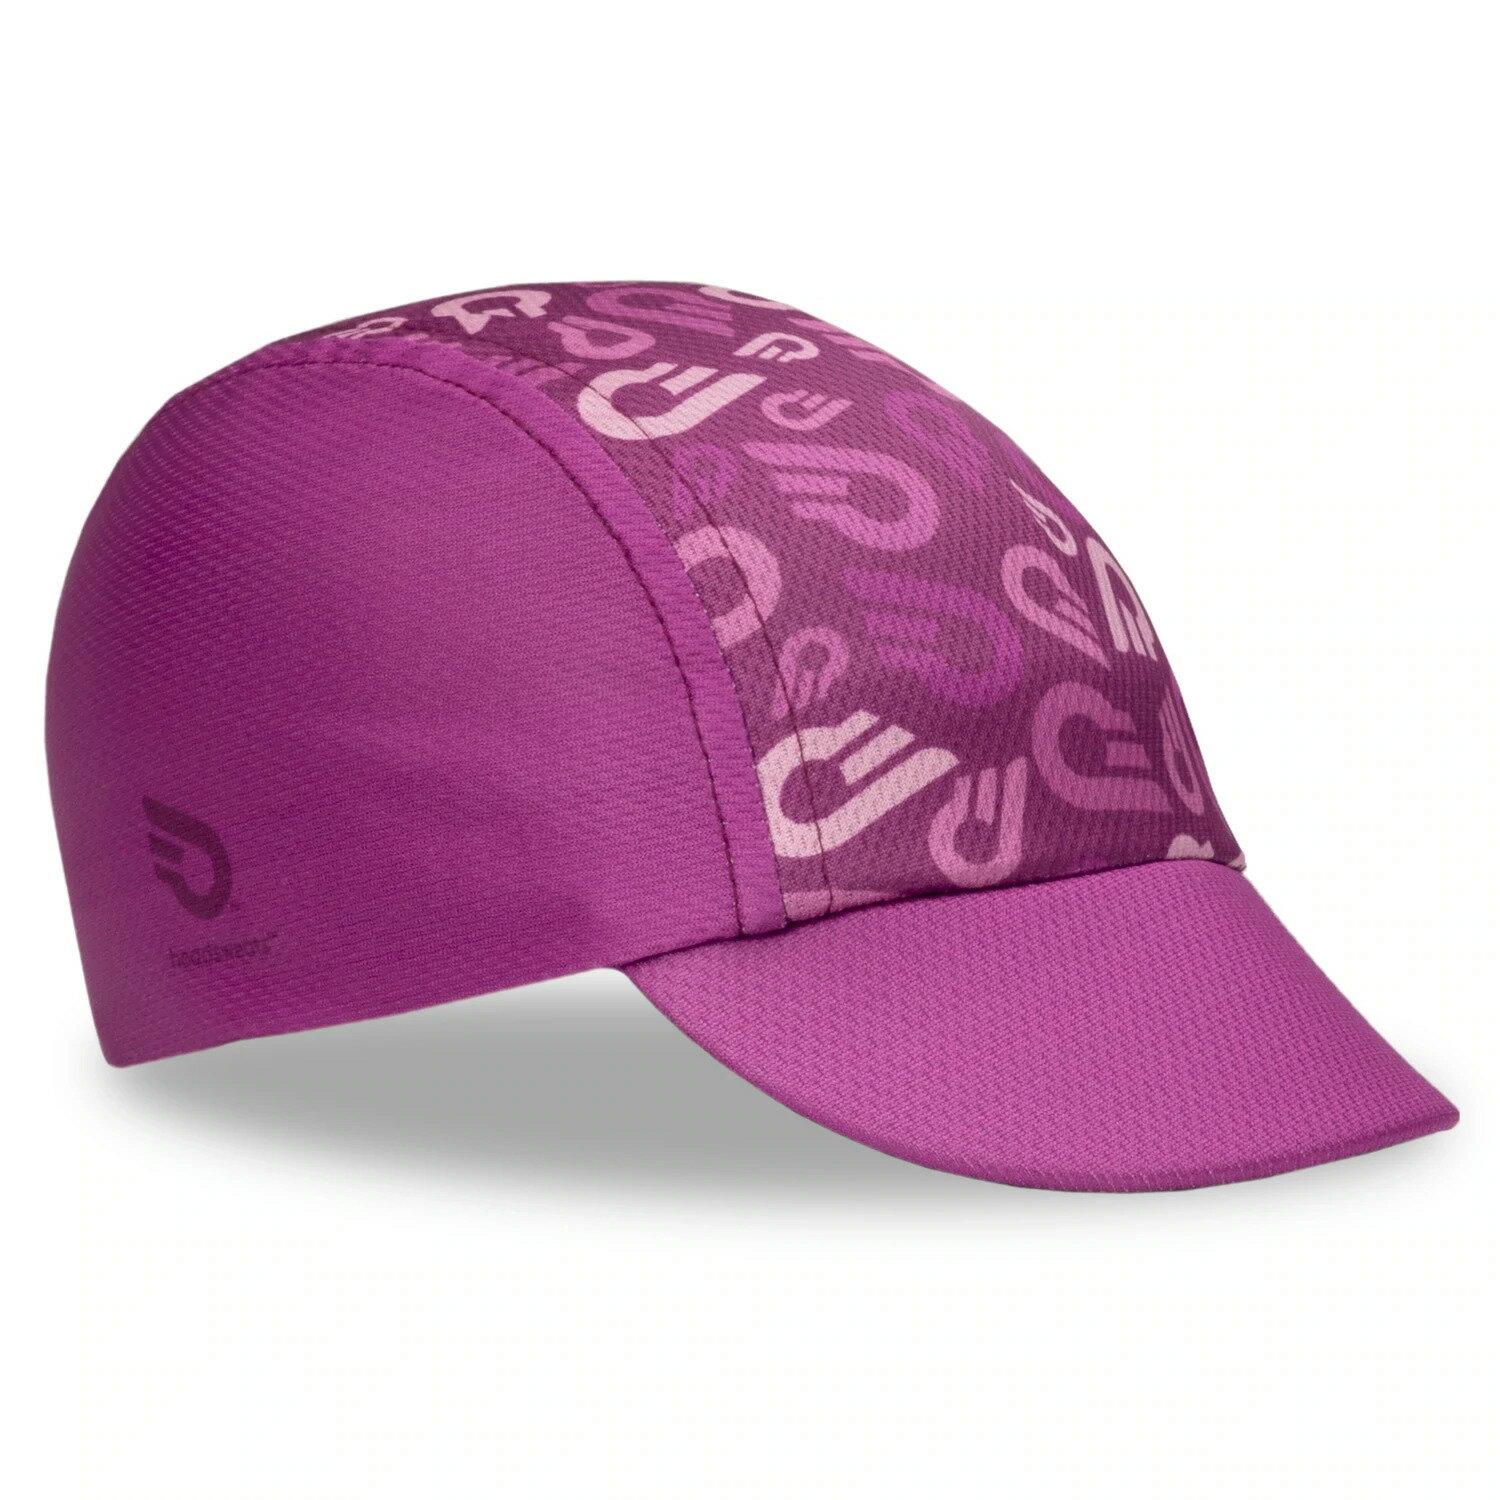 Cycle Cap | HS Print.美國汗淂 HEADSWEATS.紫色單車 自行車小帽.環台挑戰.鐵人三項配備.